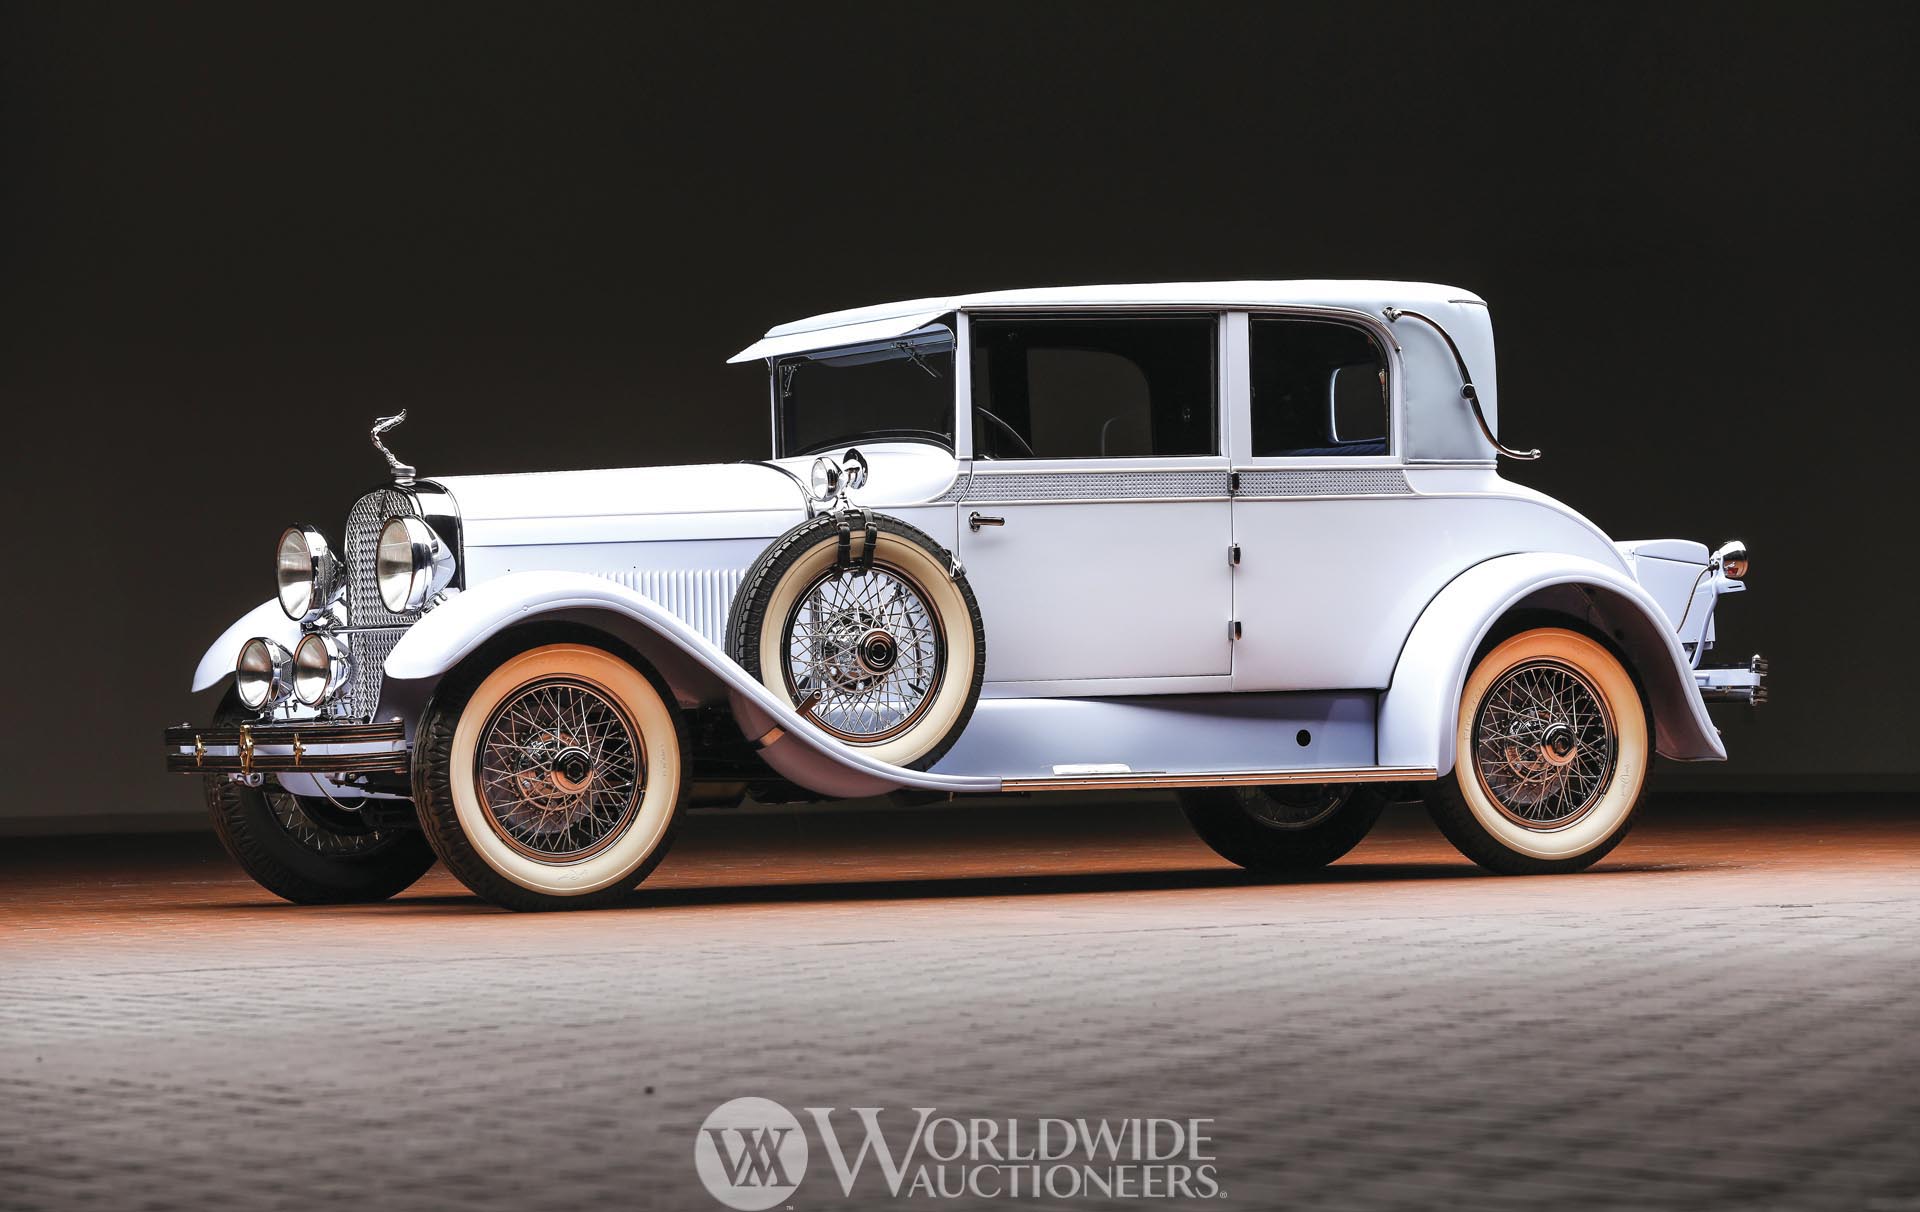 1928 Hudson Super Six Series O Victoria